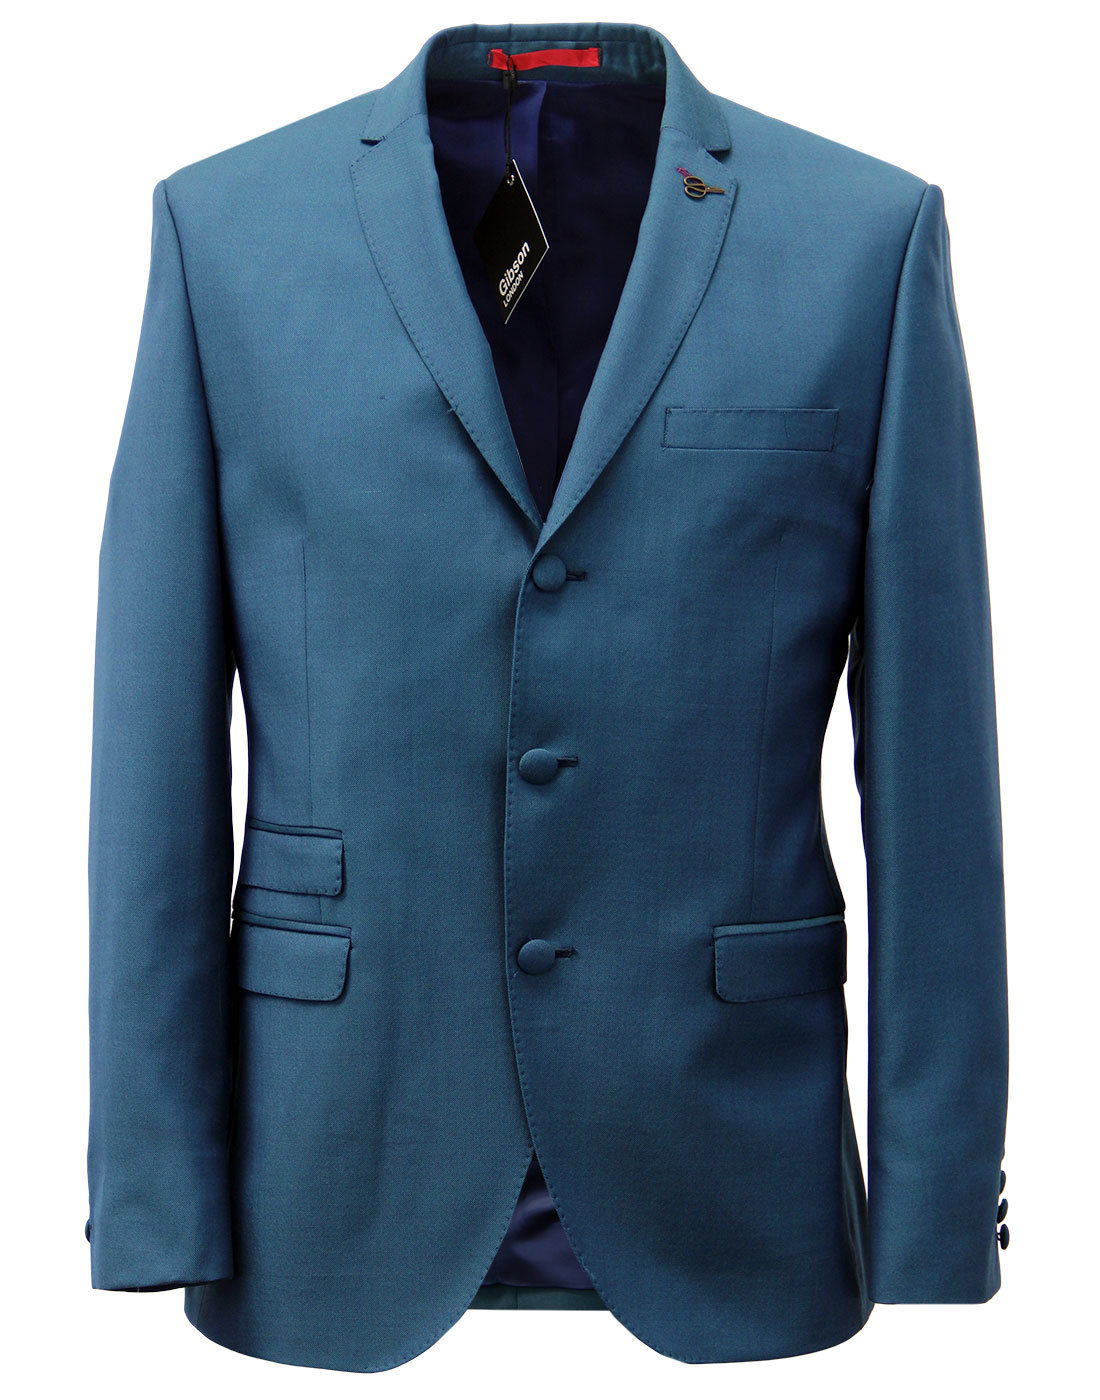 GIBSON LONDON 3 Button Hopsack Tonic Suit Jacket